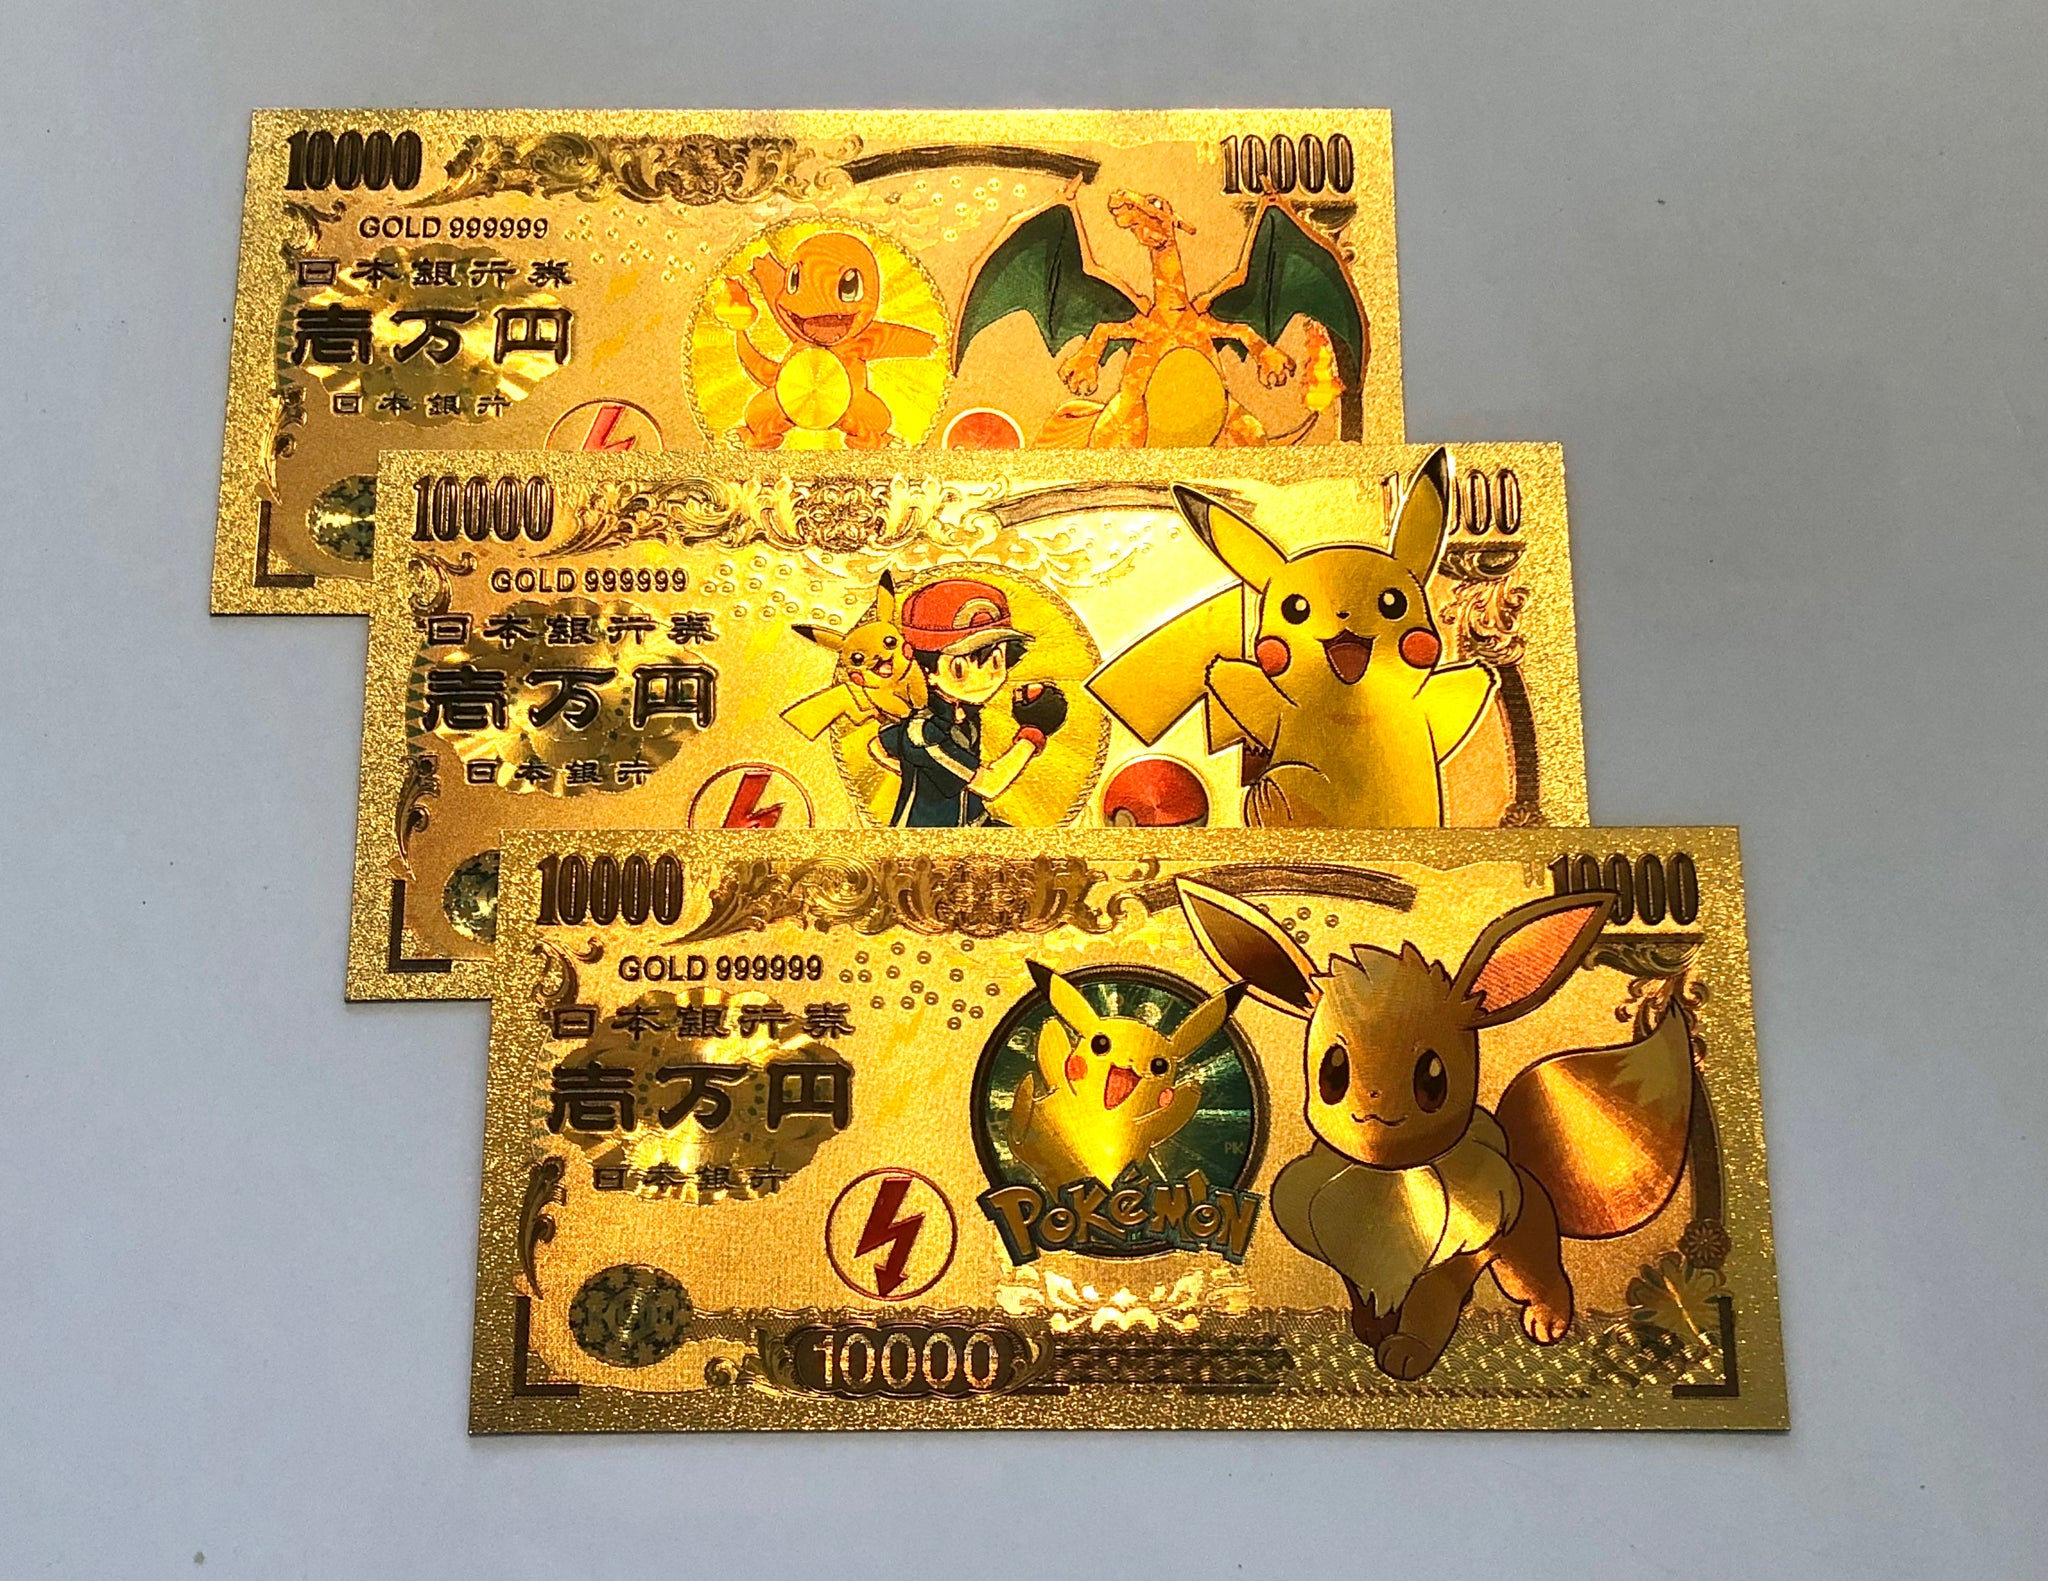 Illustrator Pikachu Custom Metal Pokemon Card – AcademGames